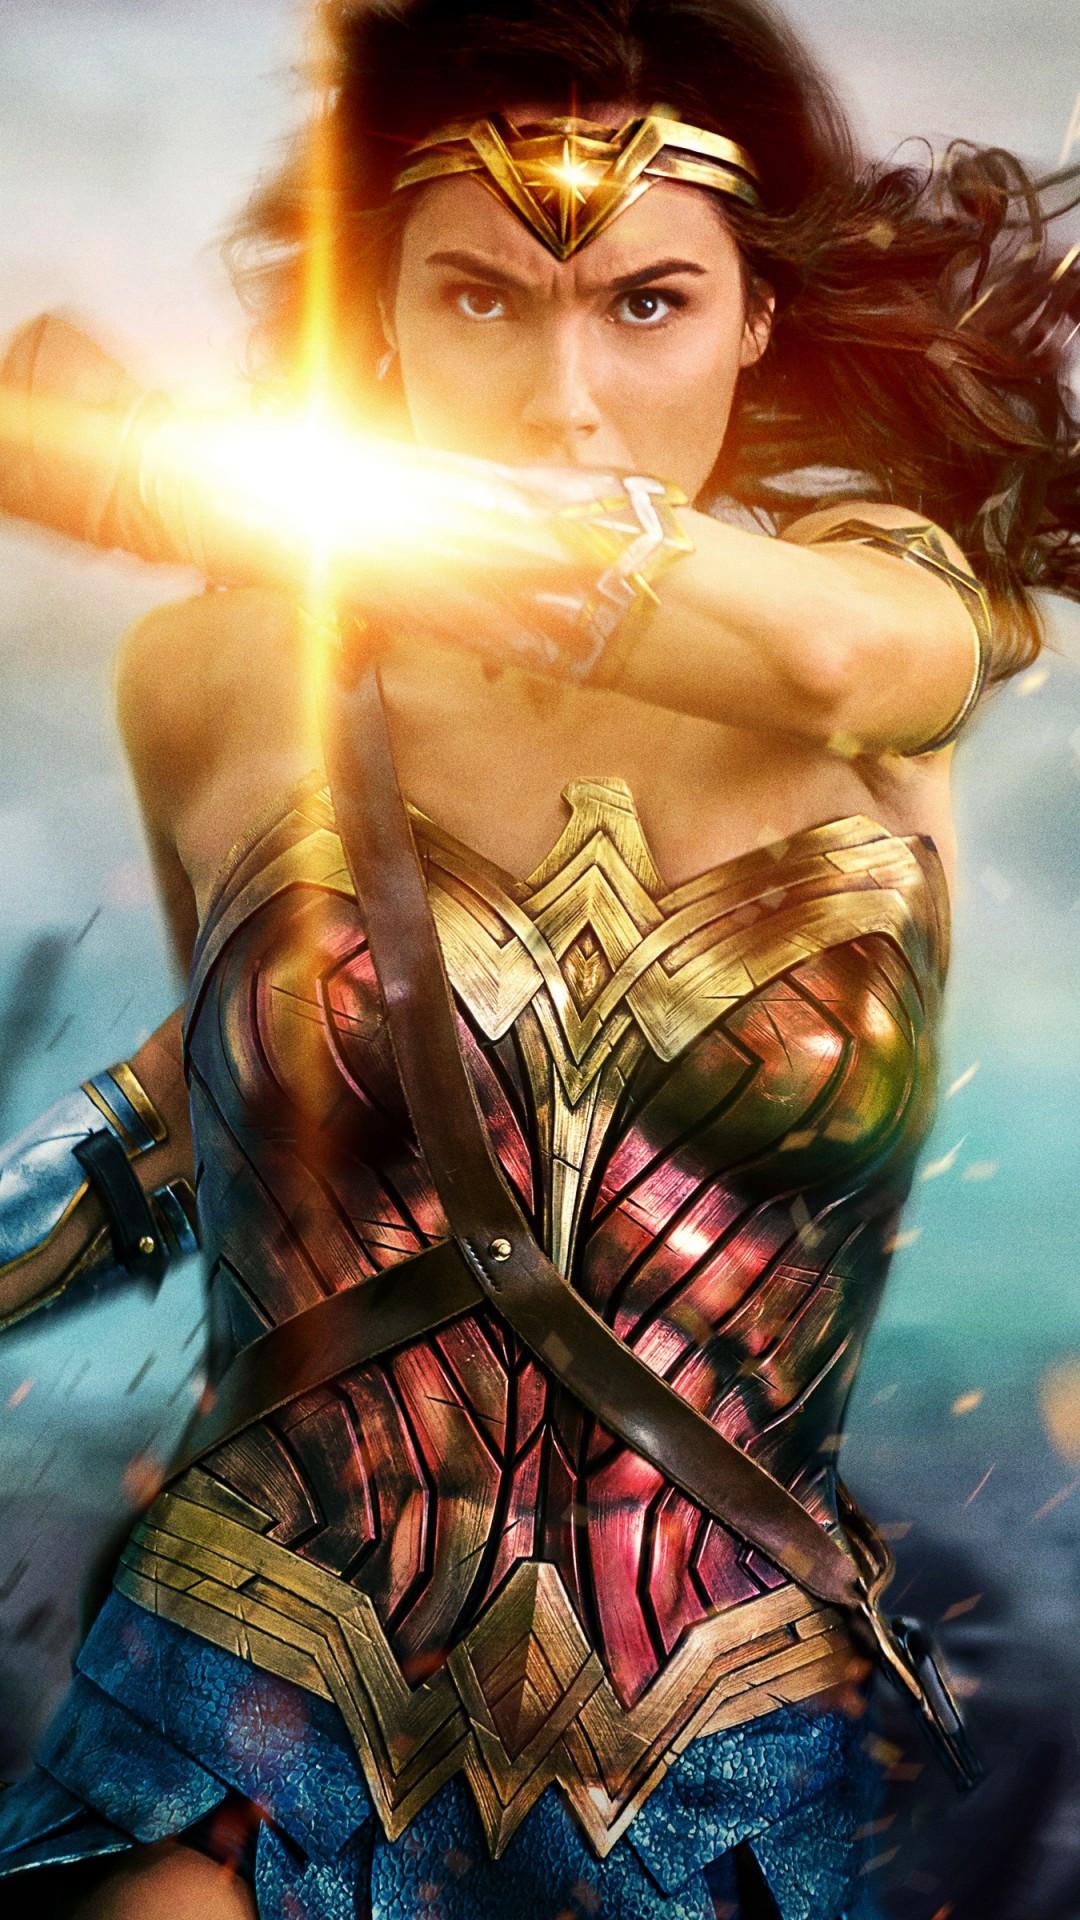 Wonder Woman Gal Gadot Wallpapers - Top Free Wonder Woman Gal Gadot ...